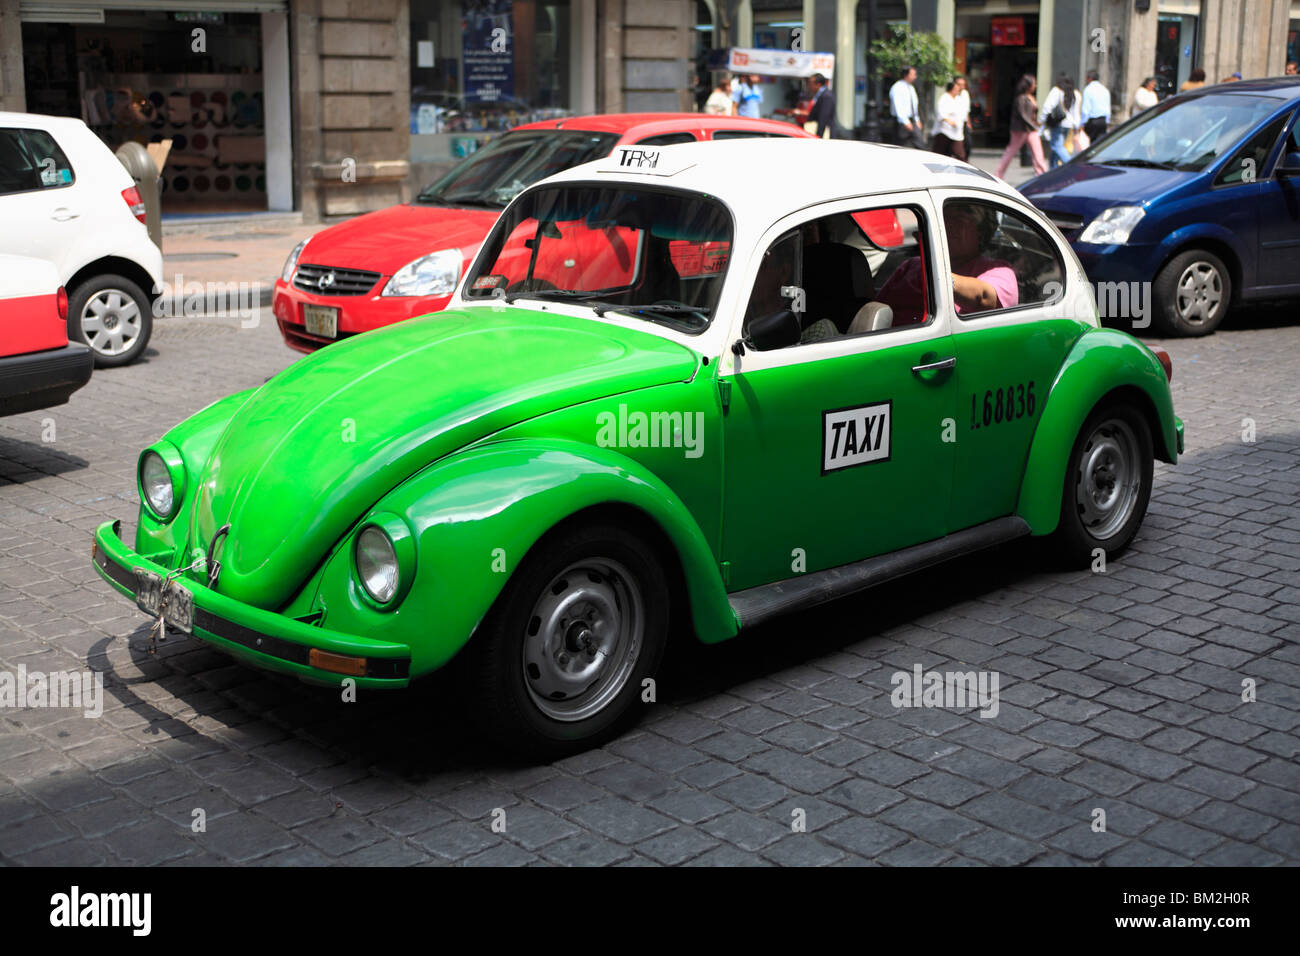 Volkswagen taxi cab, Mexico City, Mexico Stock Photo